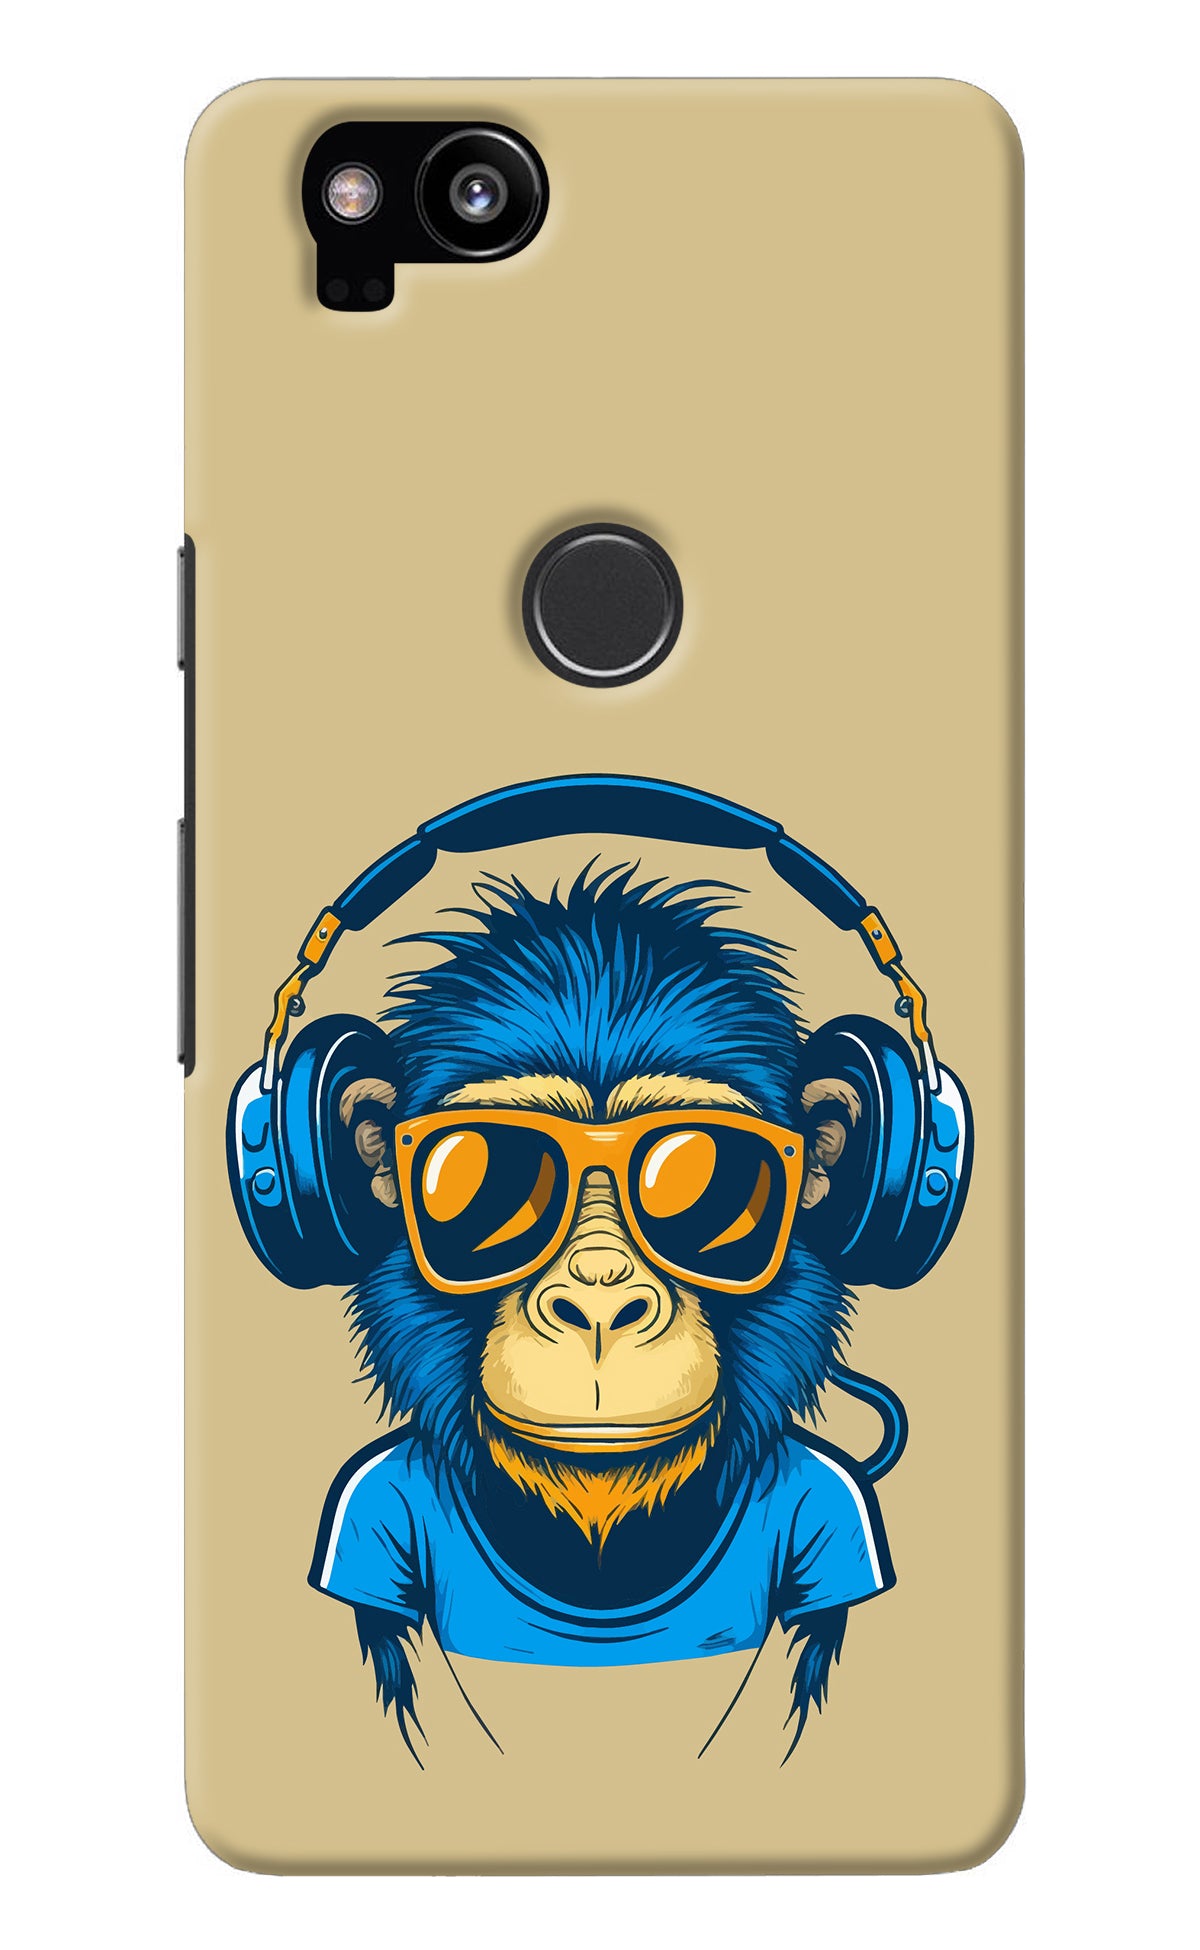 Monkey Headphone Google Pixel 2 Back Cover